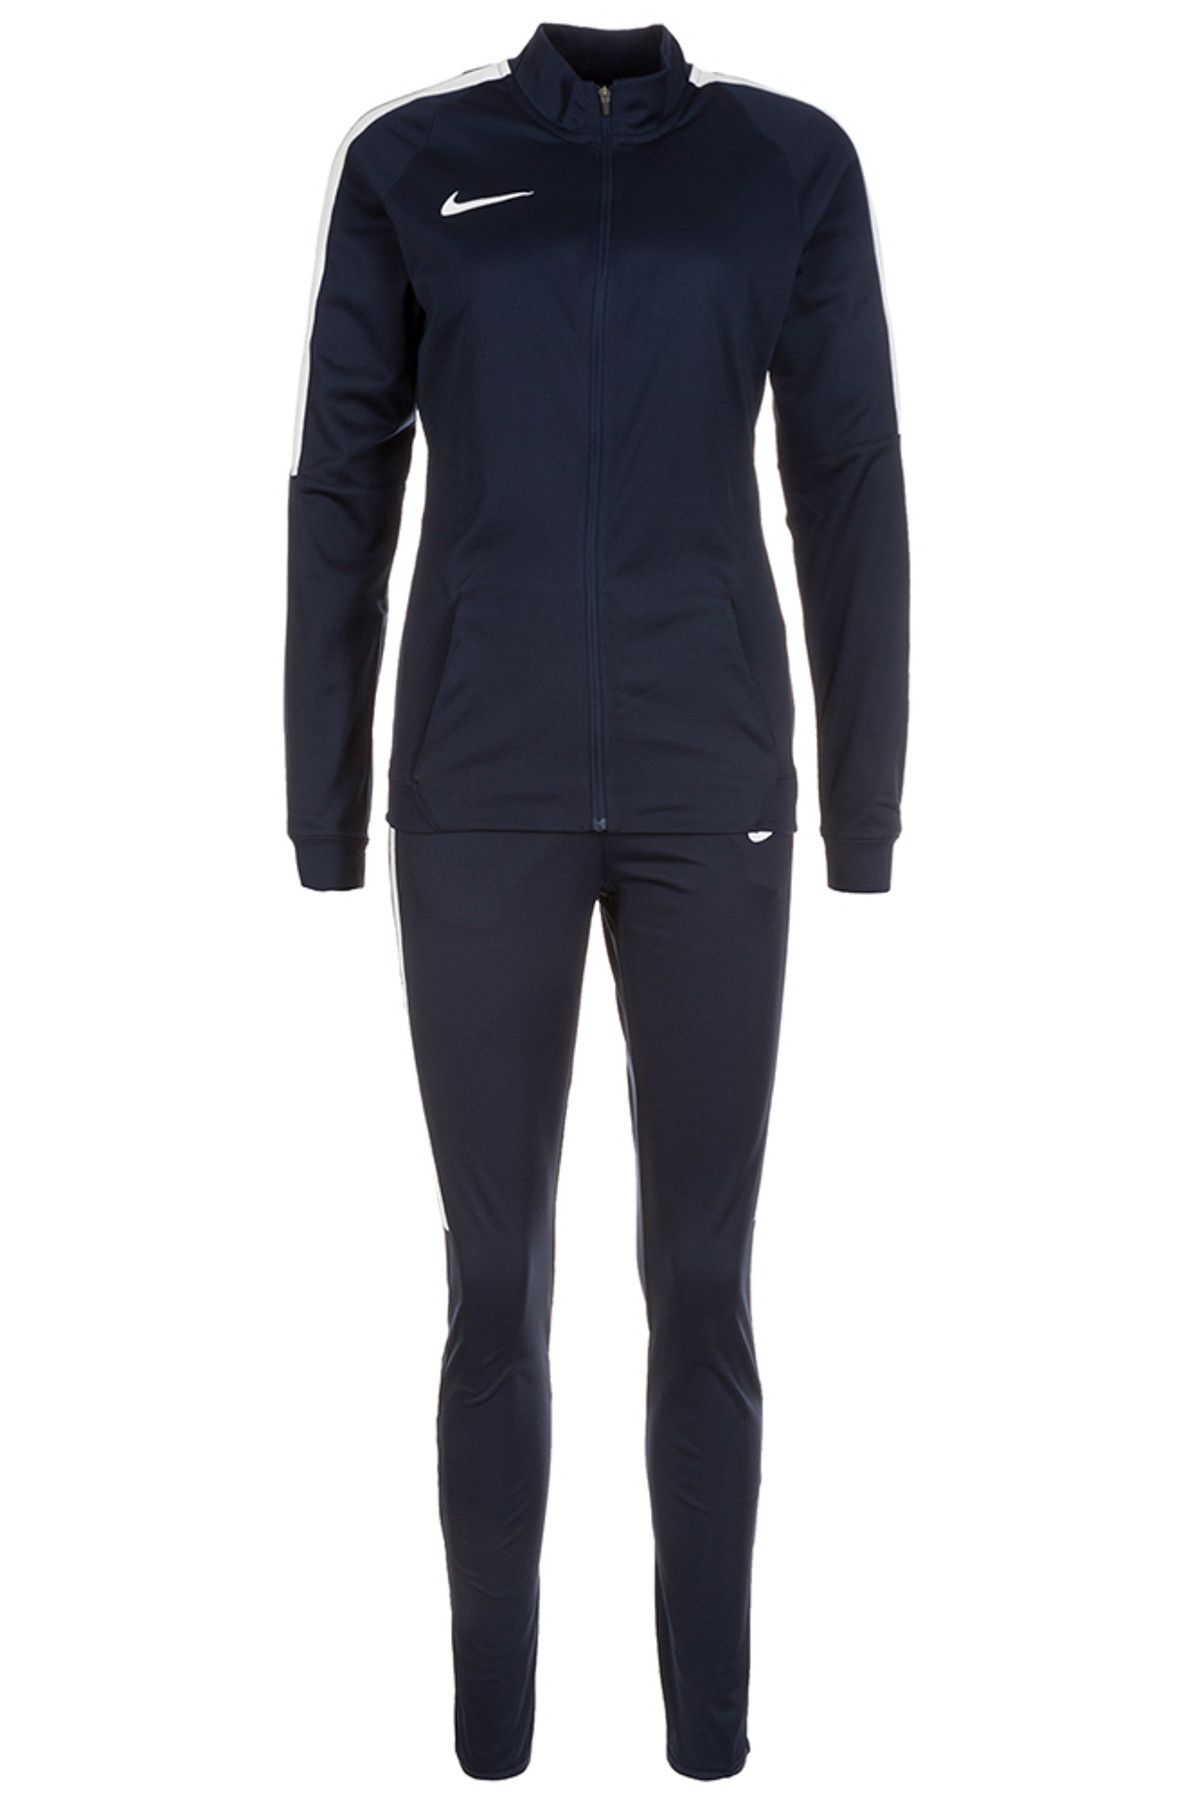 Nike Dry Squad Track Suit Kadın Eşofman Takımı - 832350-452